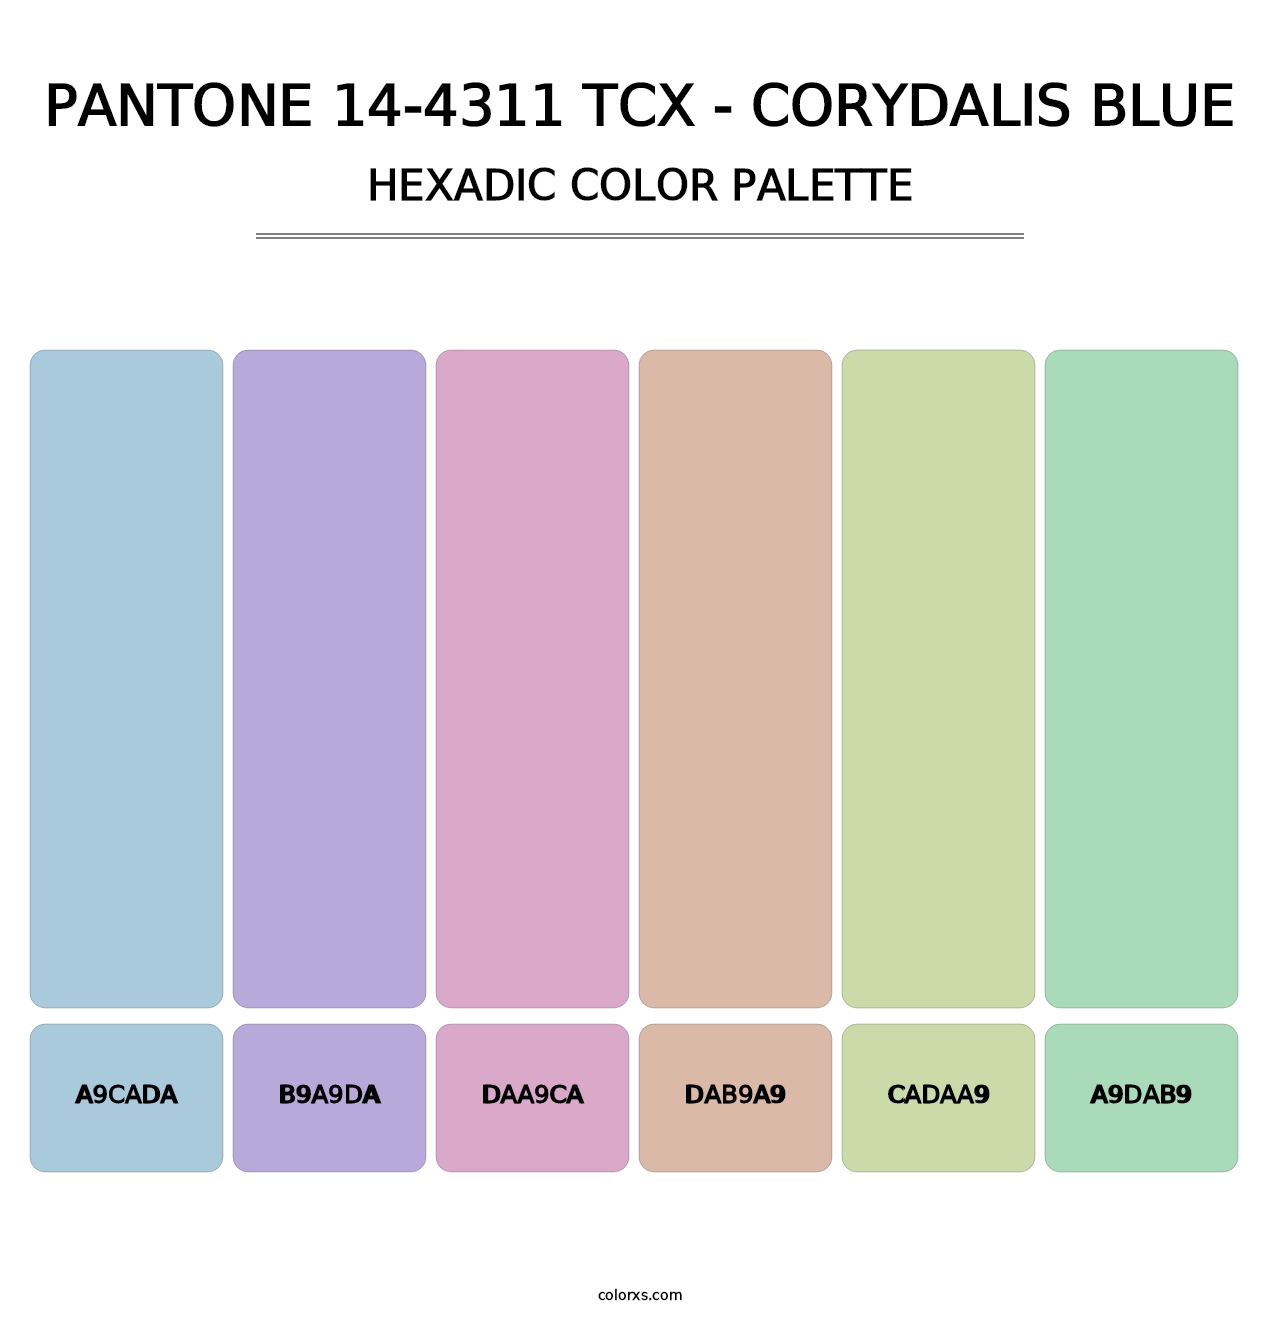 PANTONE 14-4311 TCX - Corydalis Blue - Hexadic Color Palette